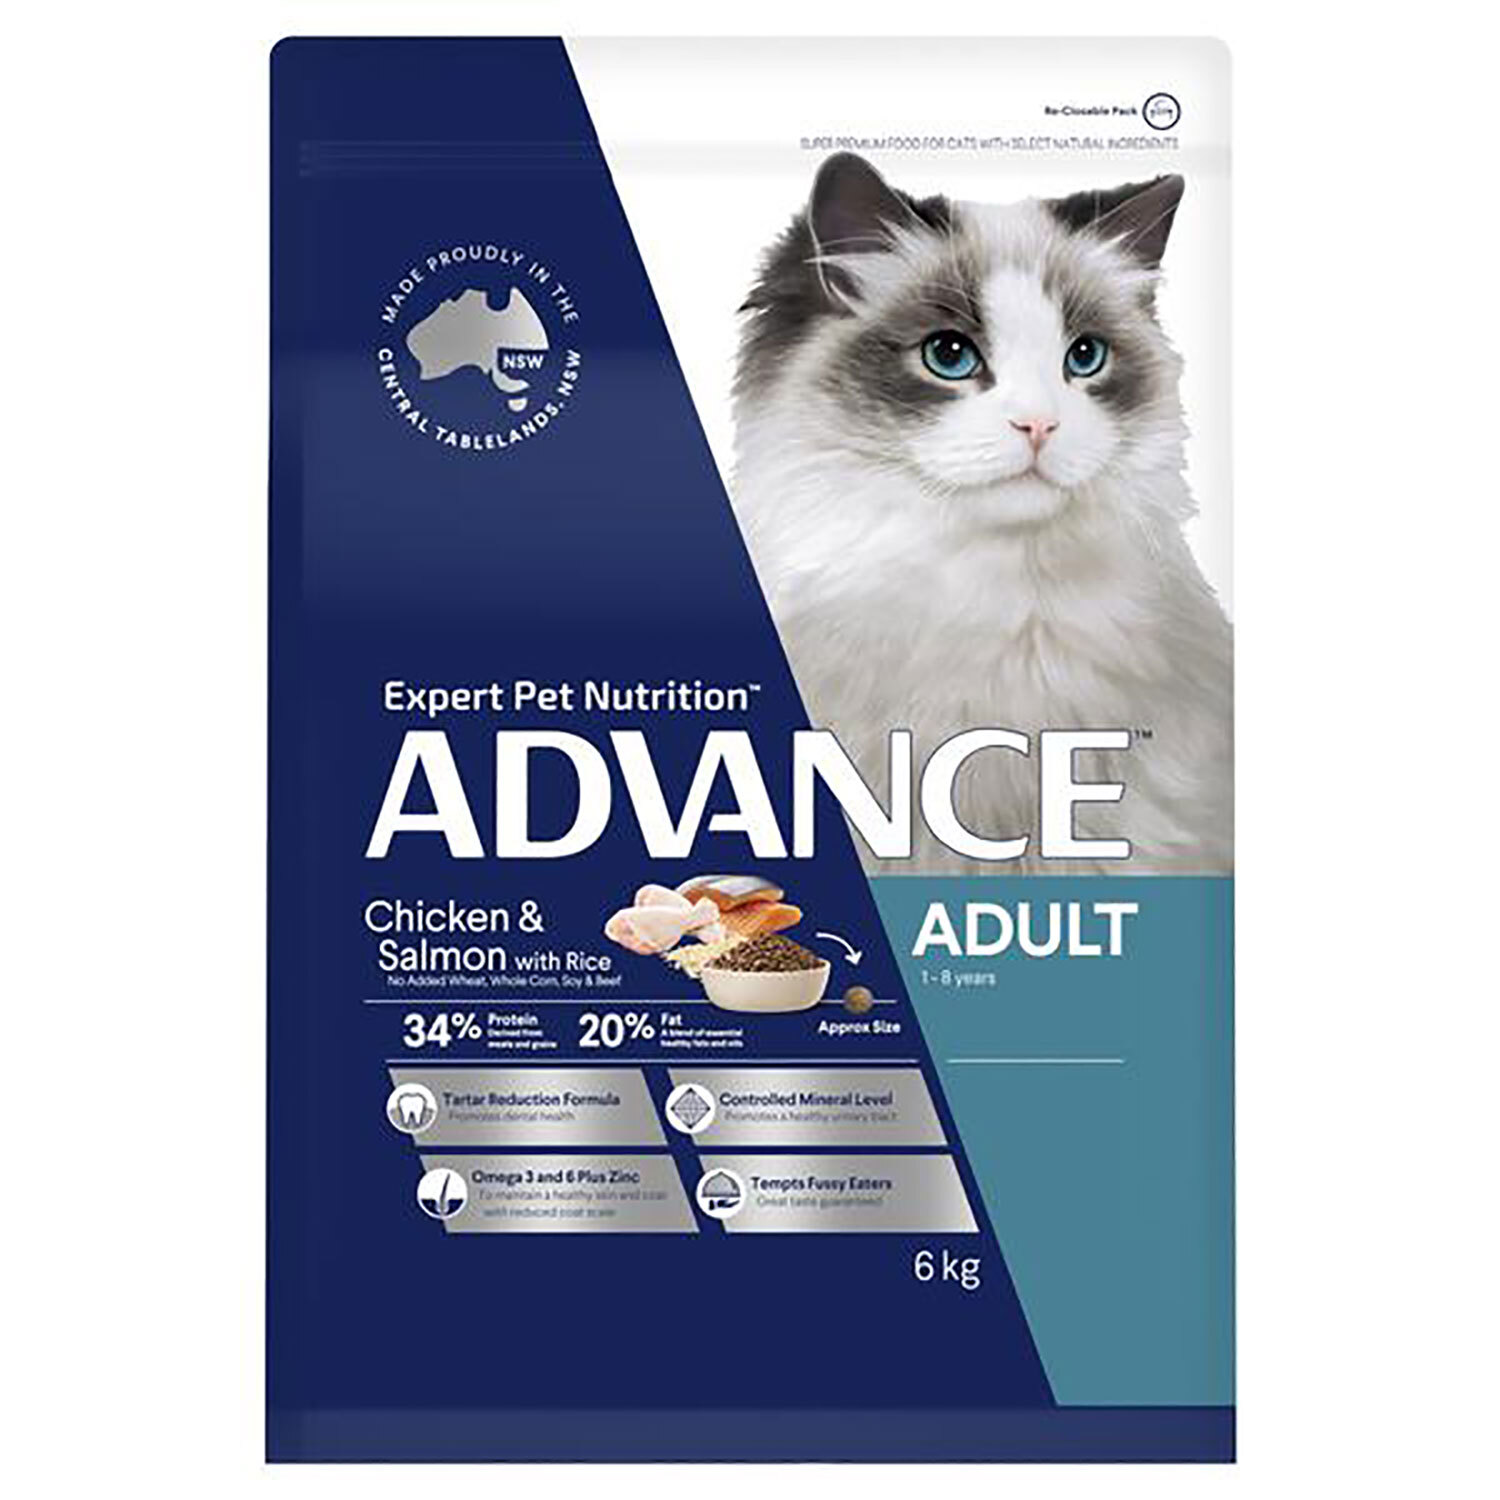 Advance Cat Adult Chicken & Salmon 3kg Advance Dry Cat Food